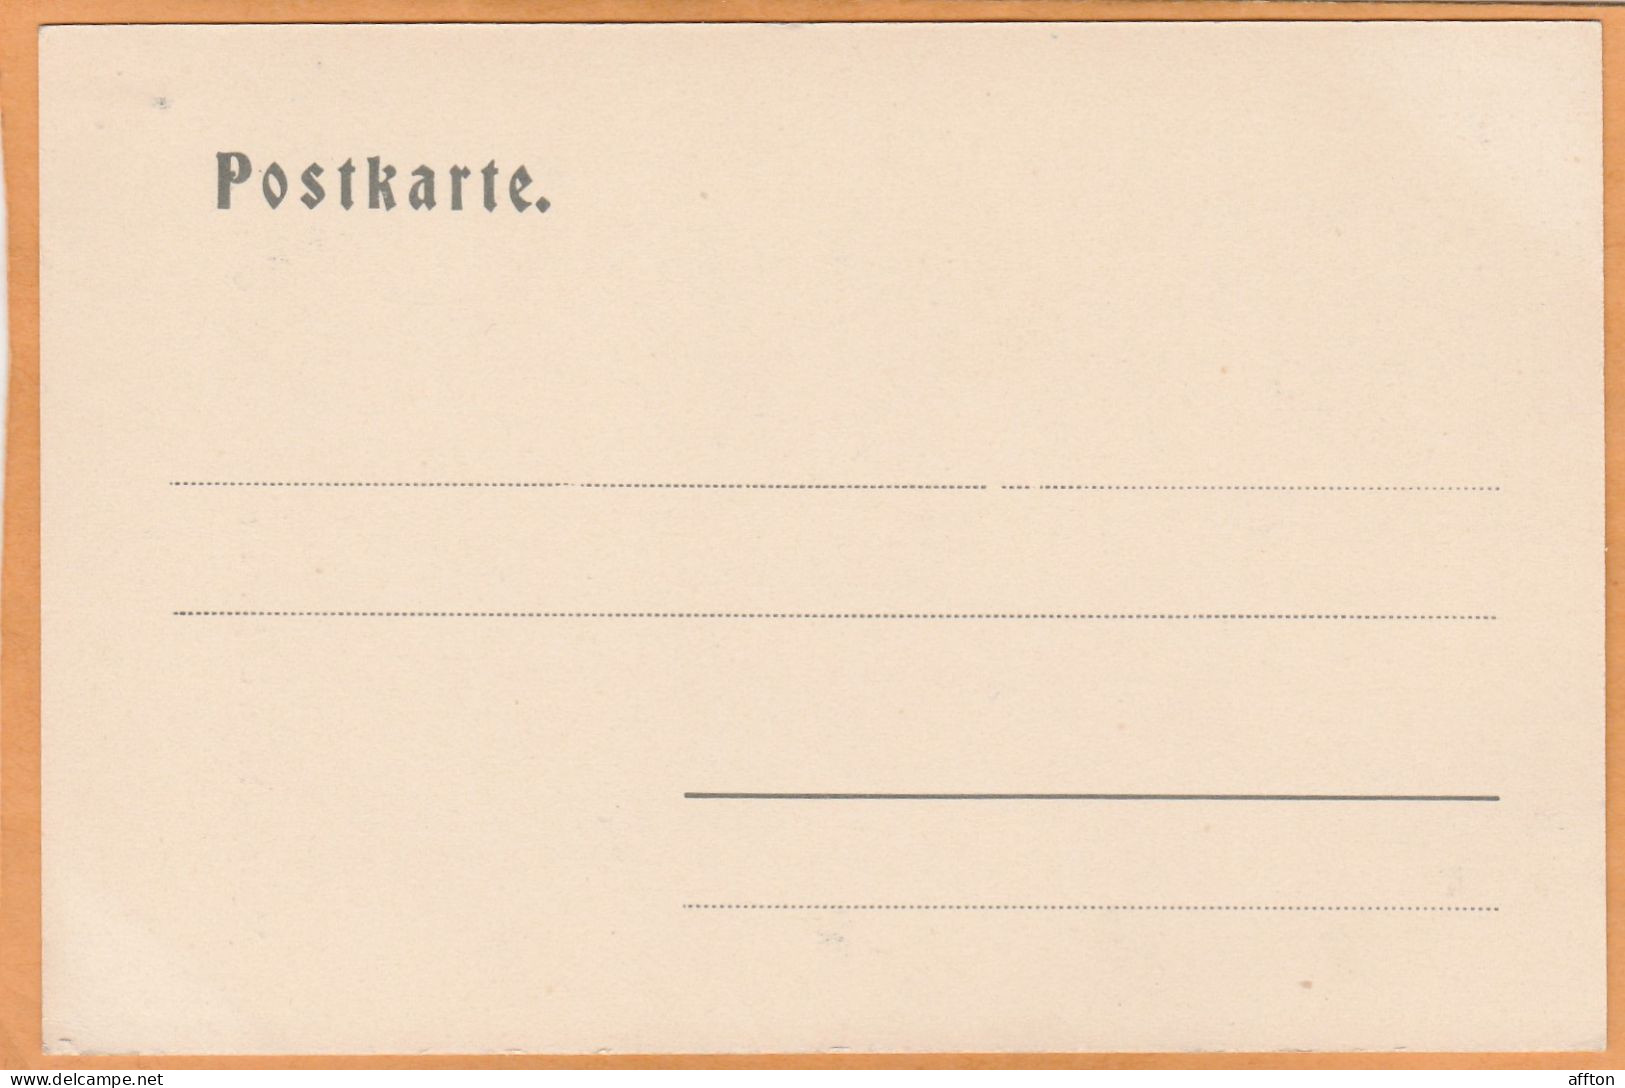 Oetz Austria 1900 Postcard - Oetz